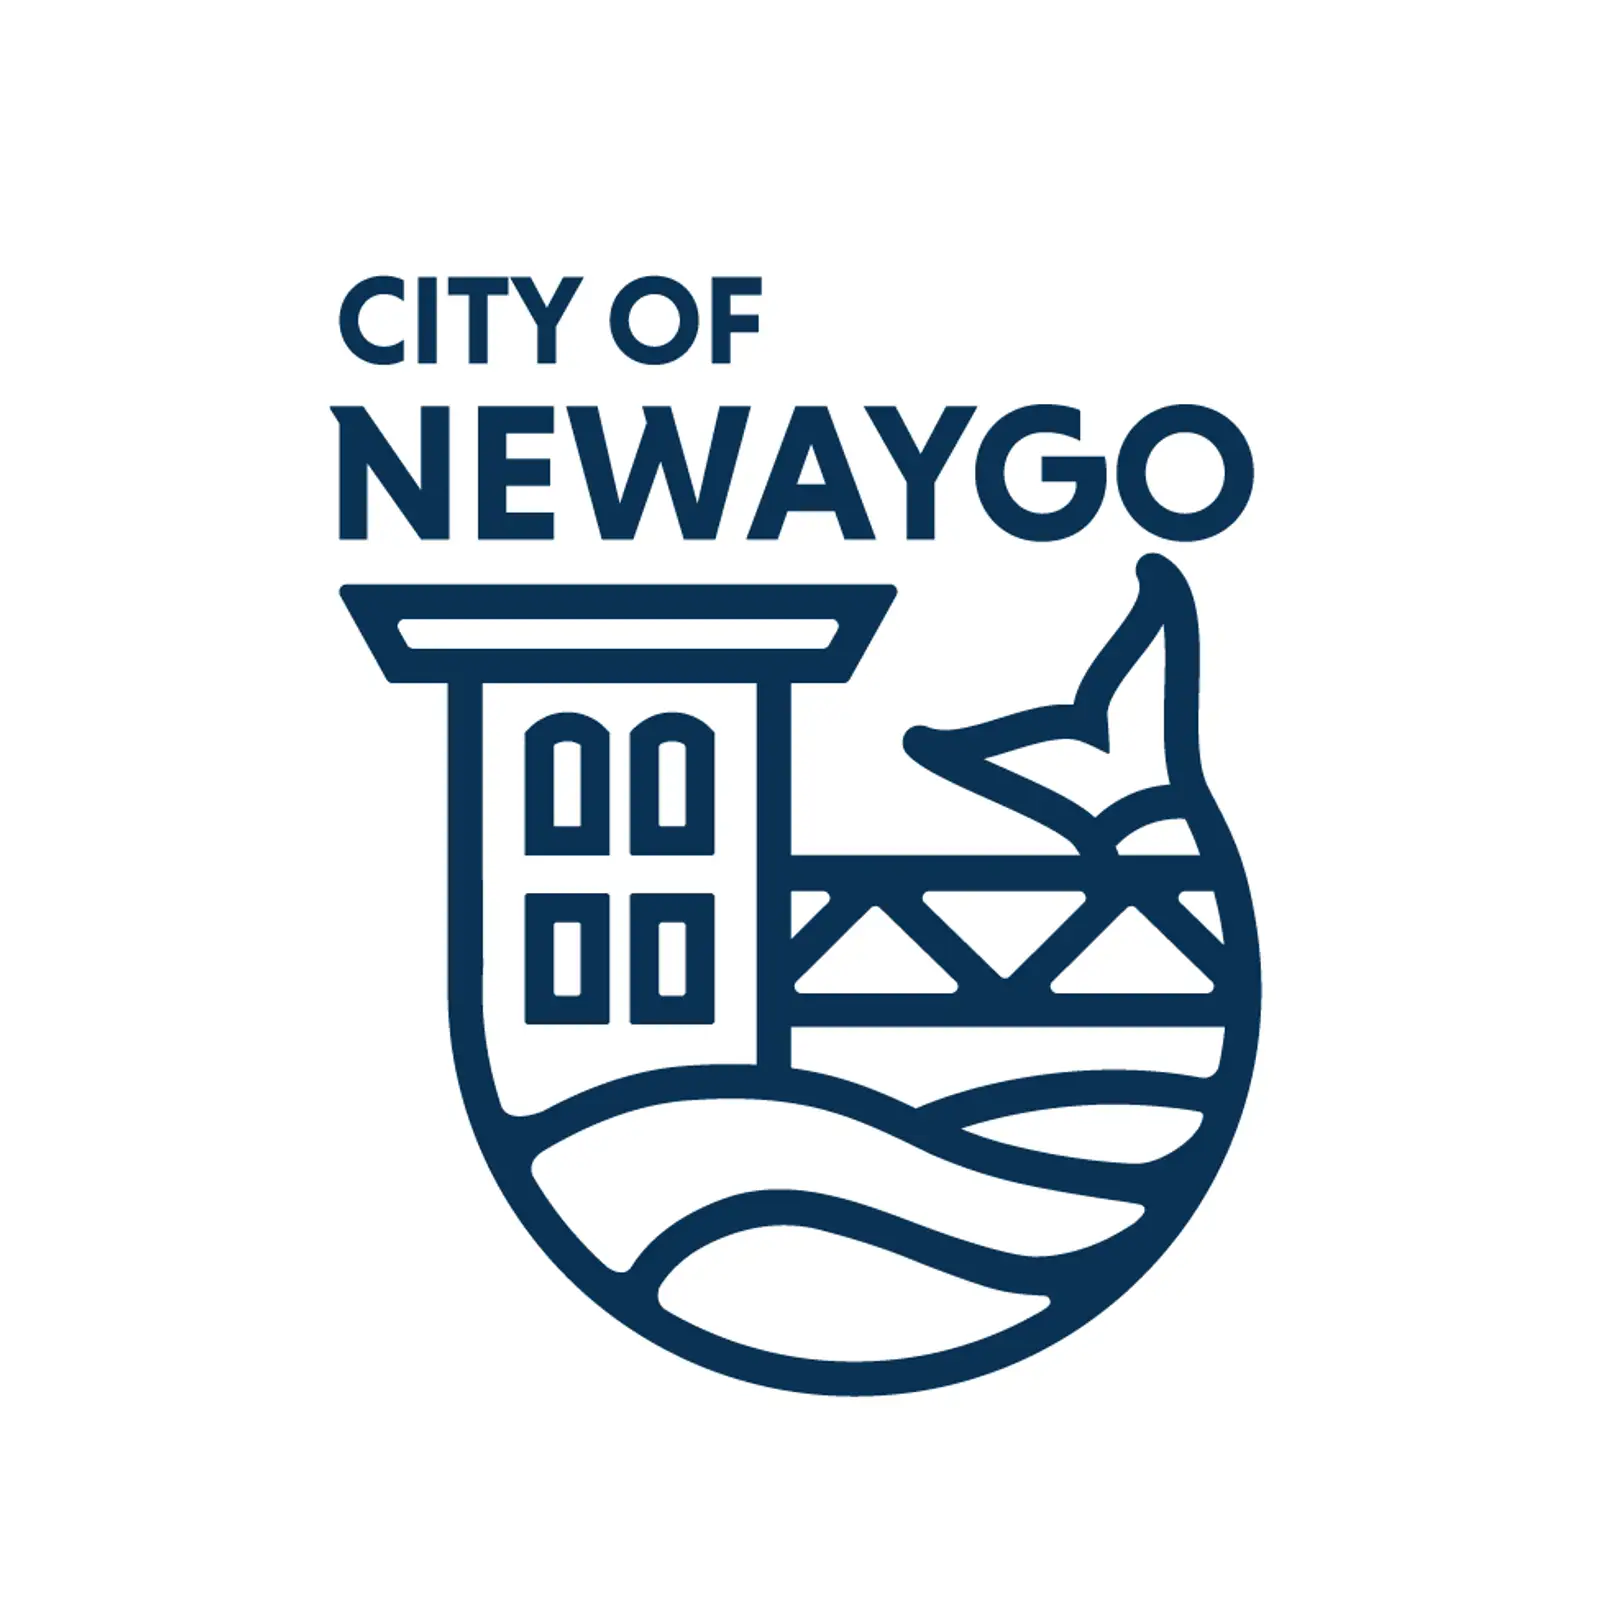 City Of Newaygo logo